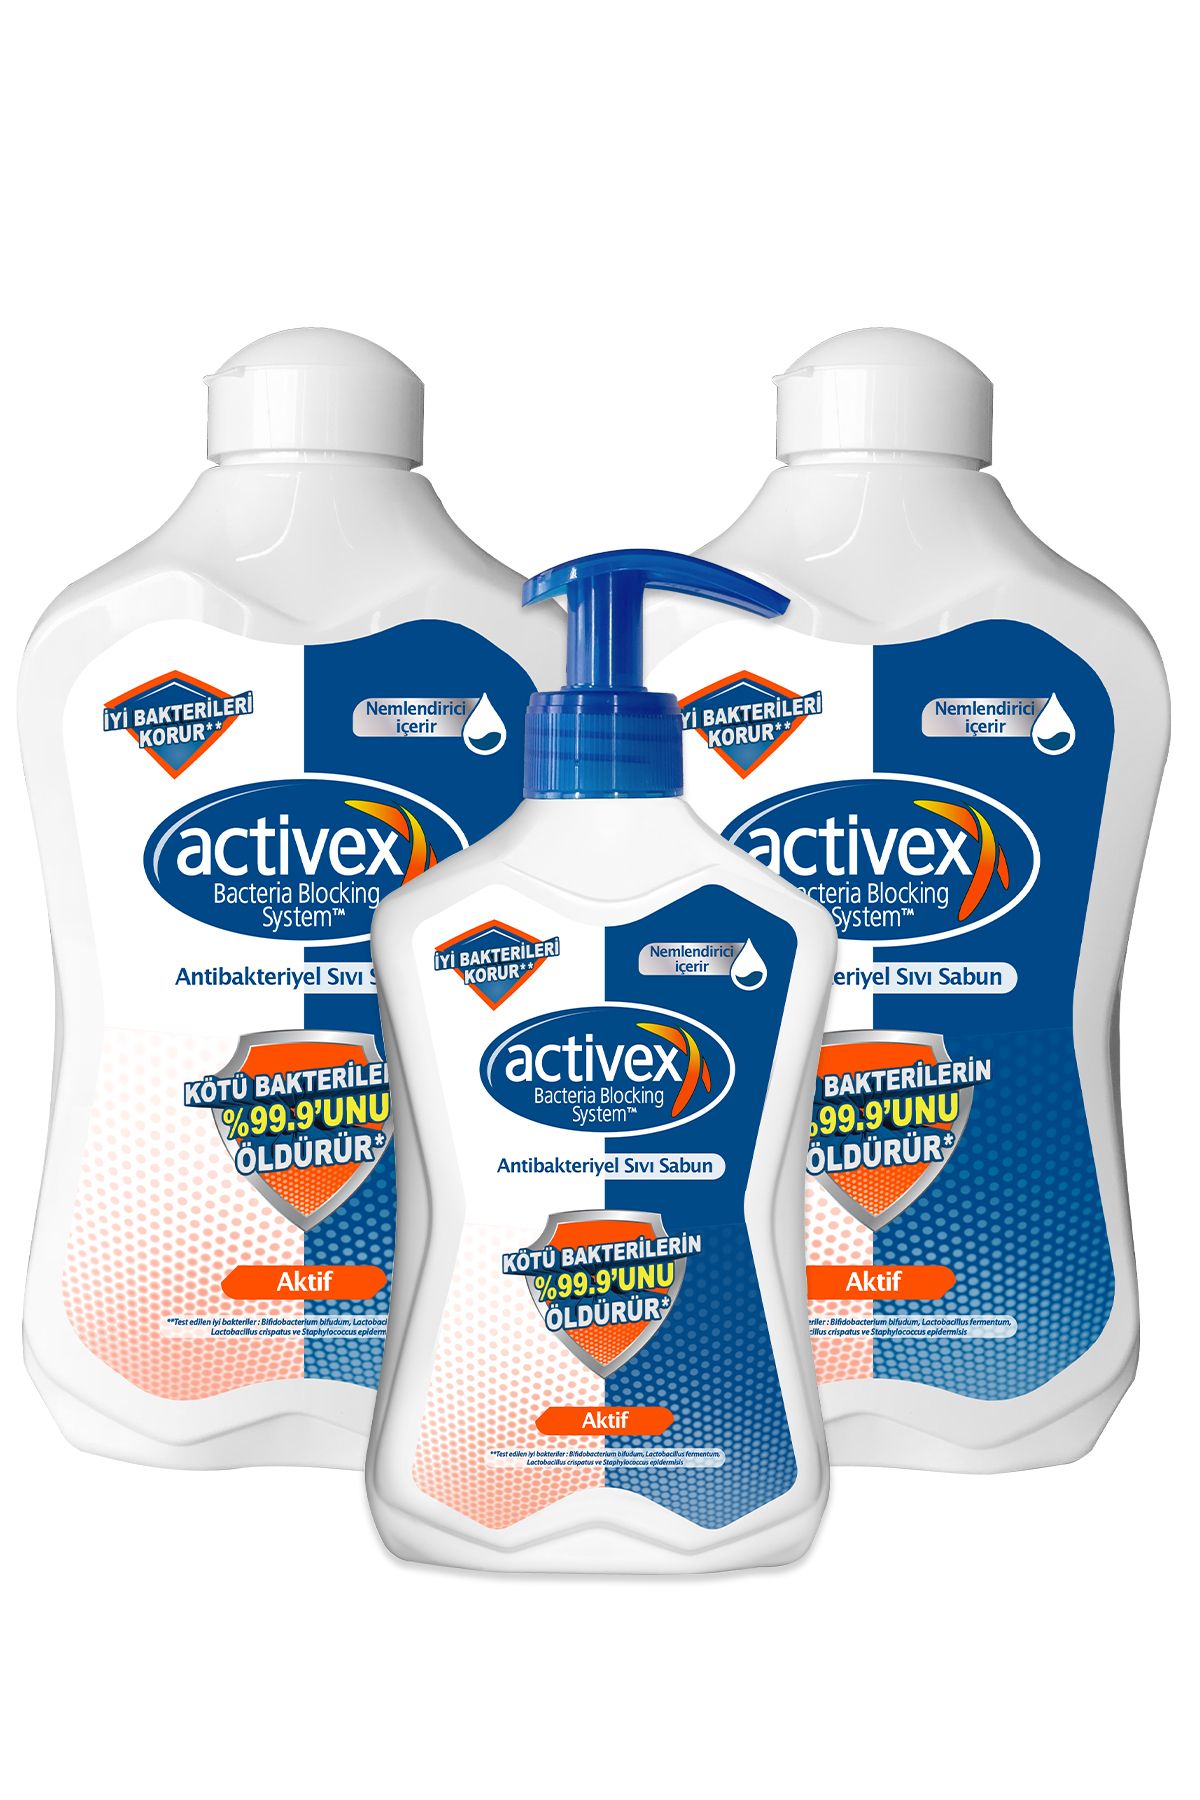 Activex Antibakteriyel Sıvı Sabun Aktif 2x1.5 Lt 500 ml